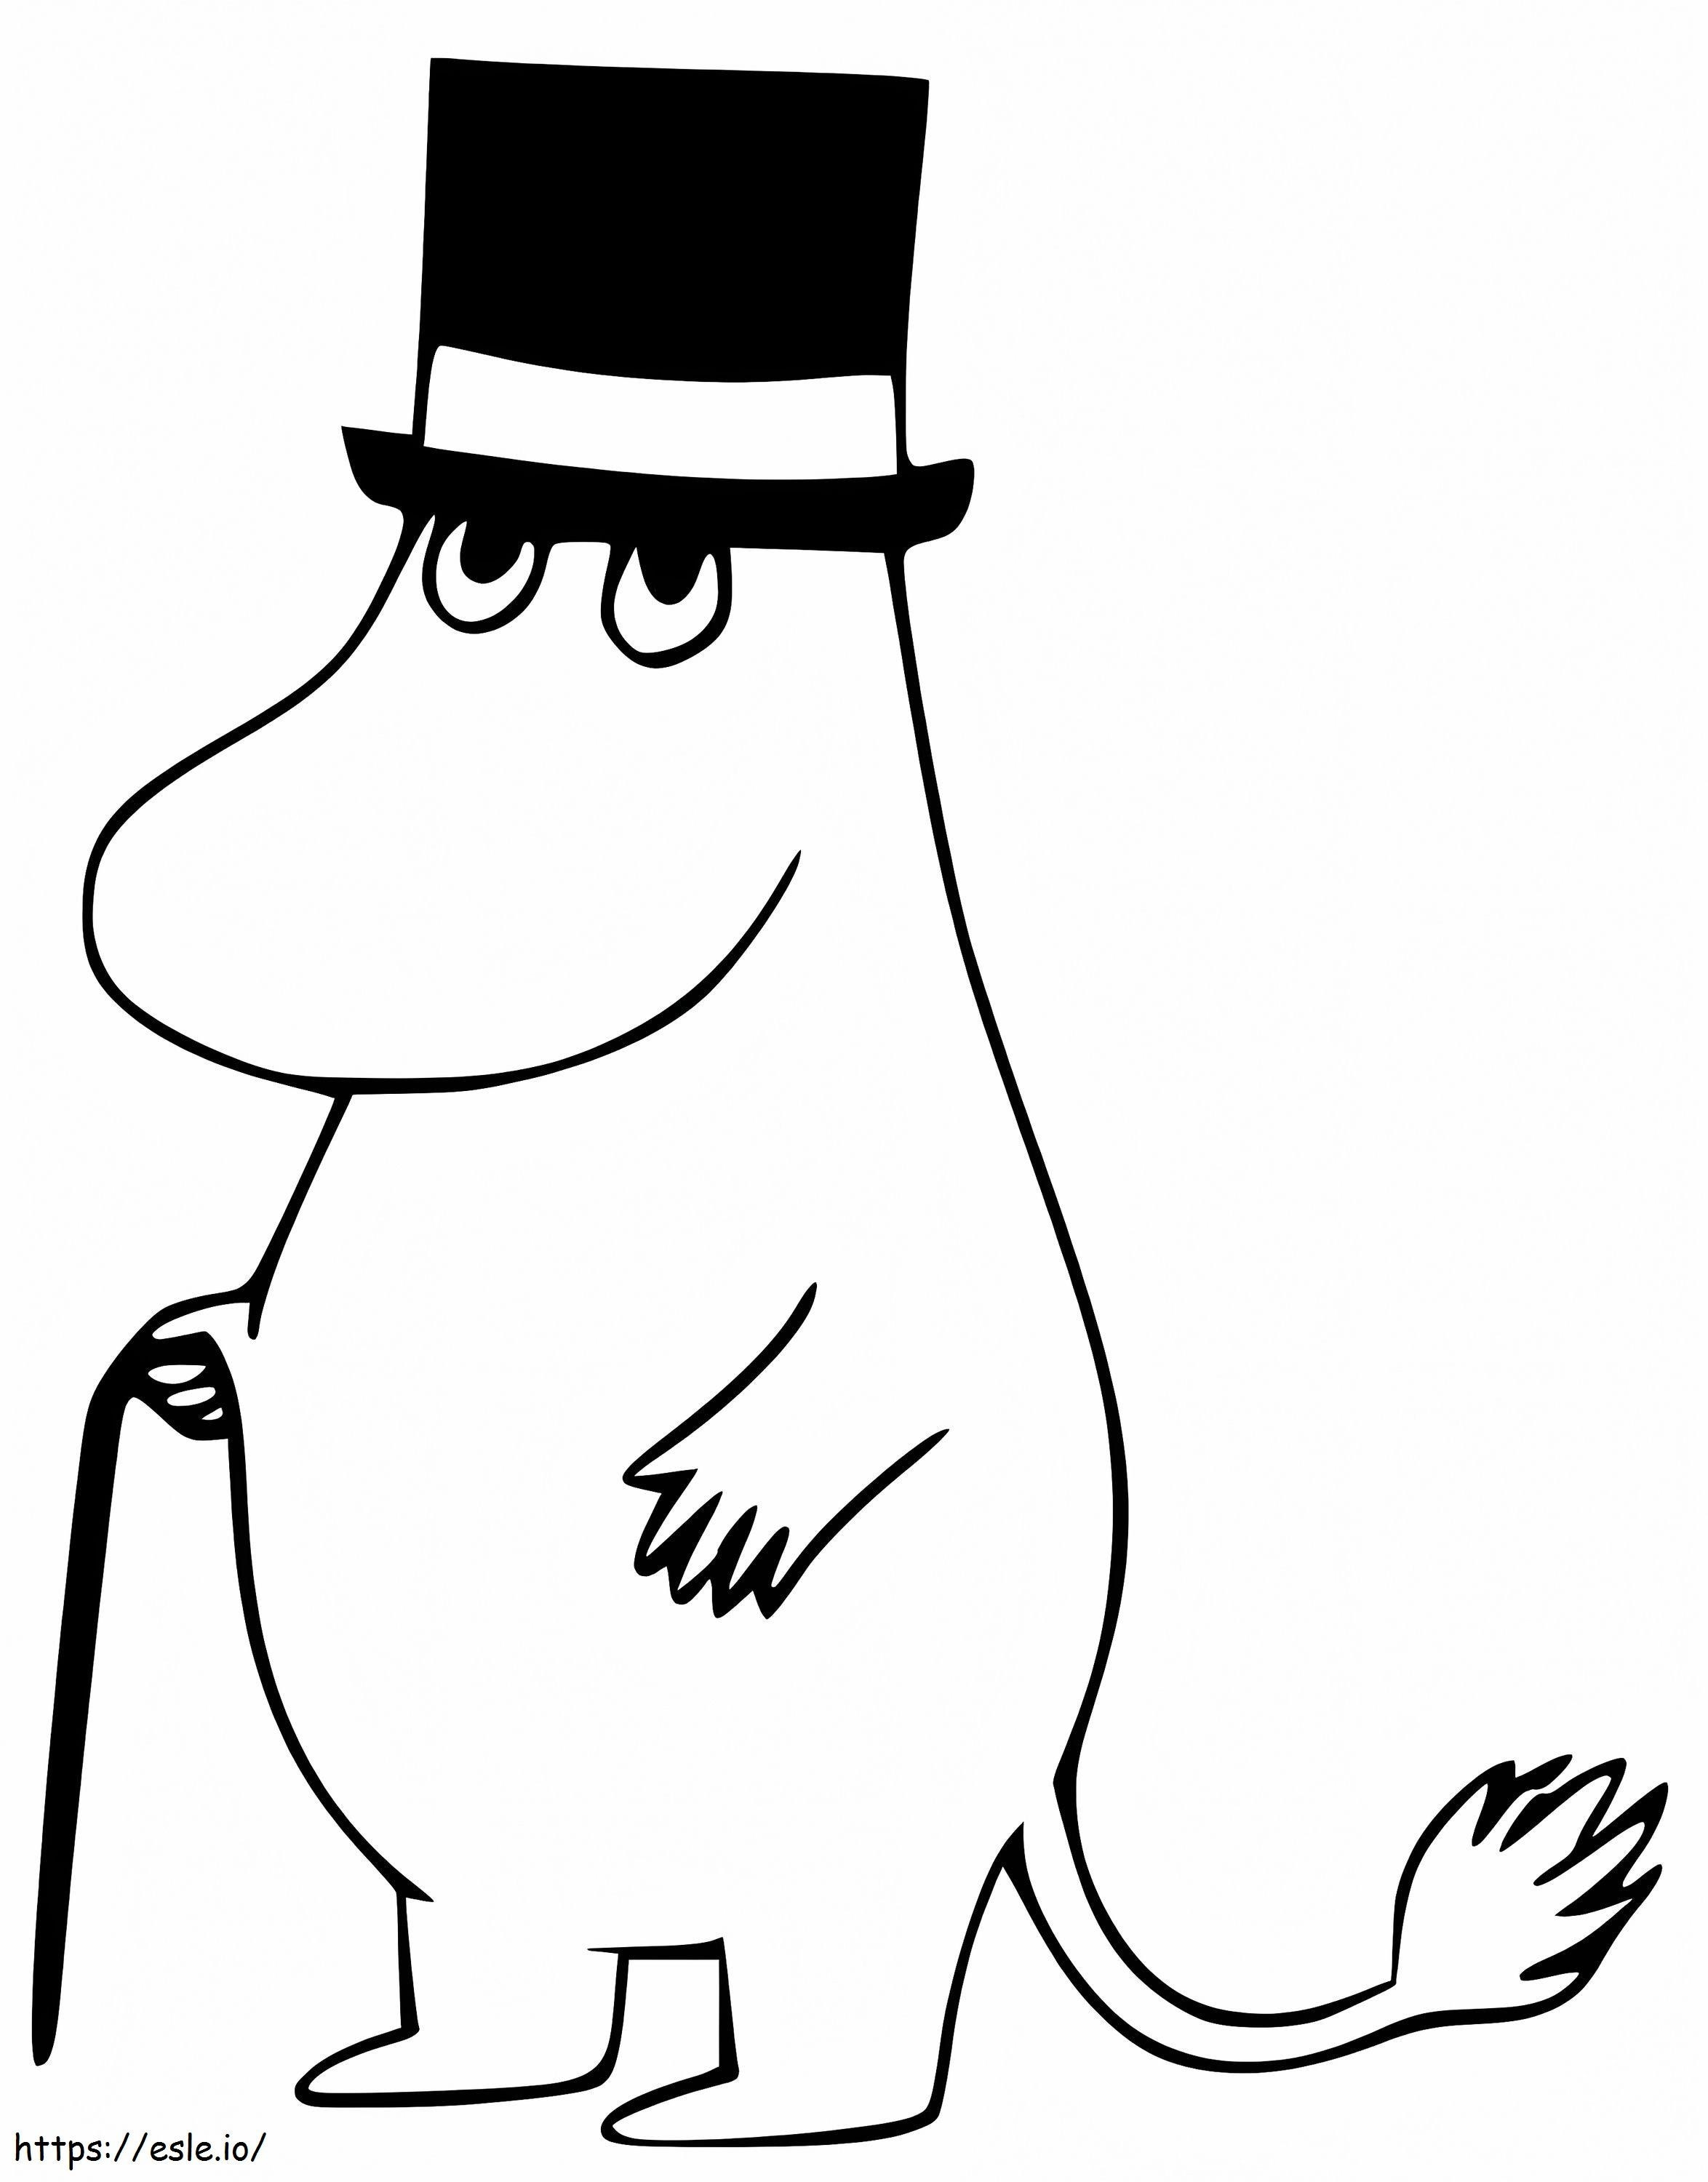 Moominpappa From Moomin coloring page